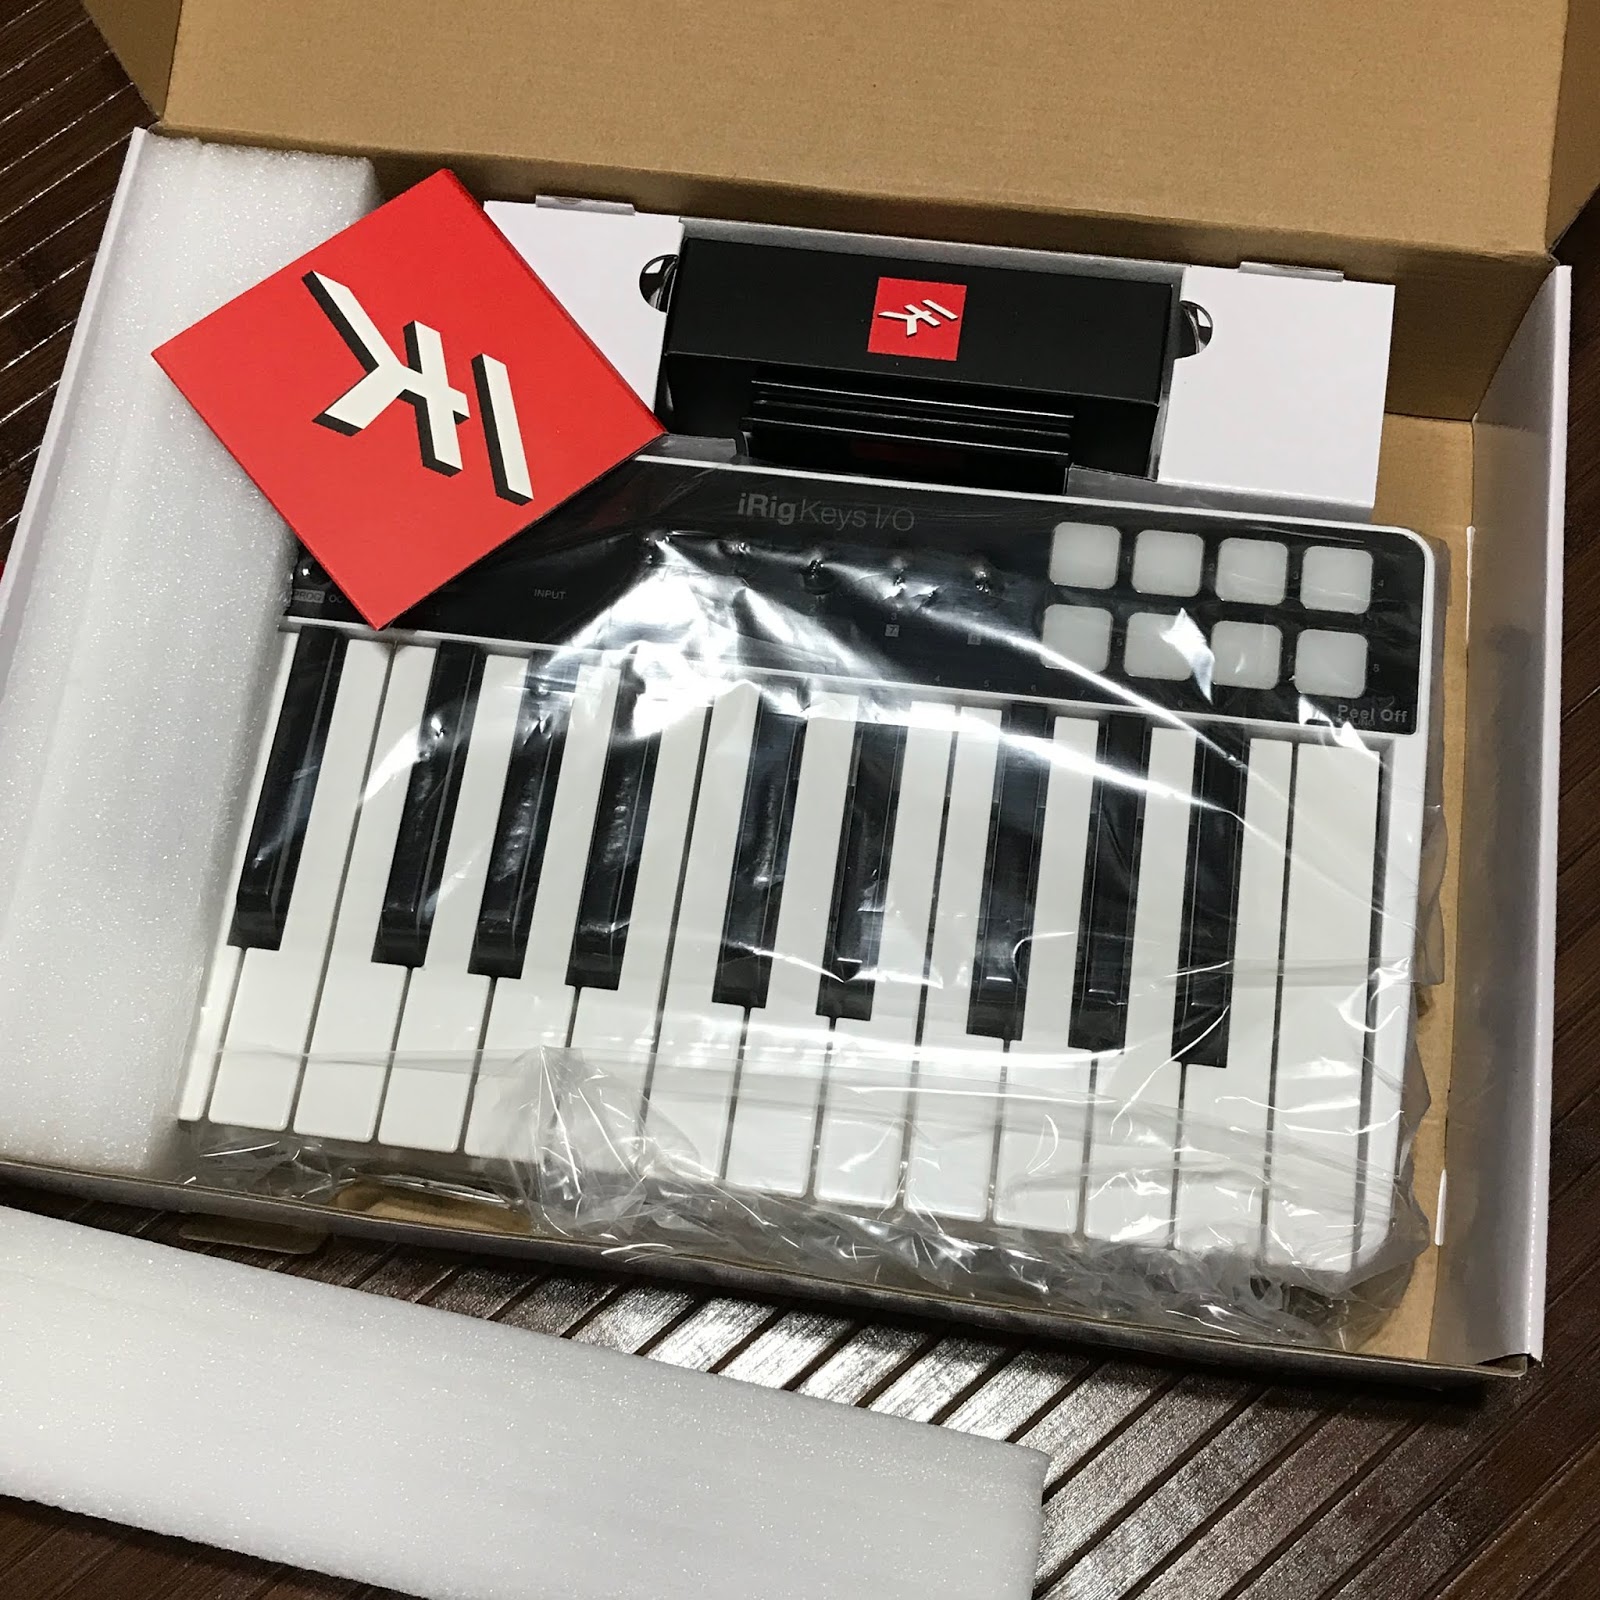 【DTM】初心者が欲しい物、全部入り！MIDIキーボード『iRig Keys I/O 25』買っちゃいました！[開封レビュー]